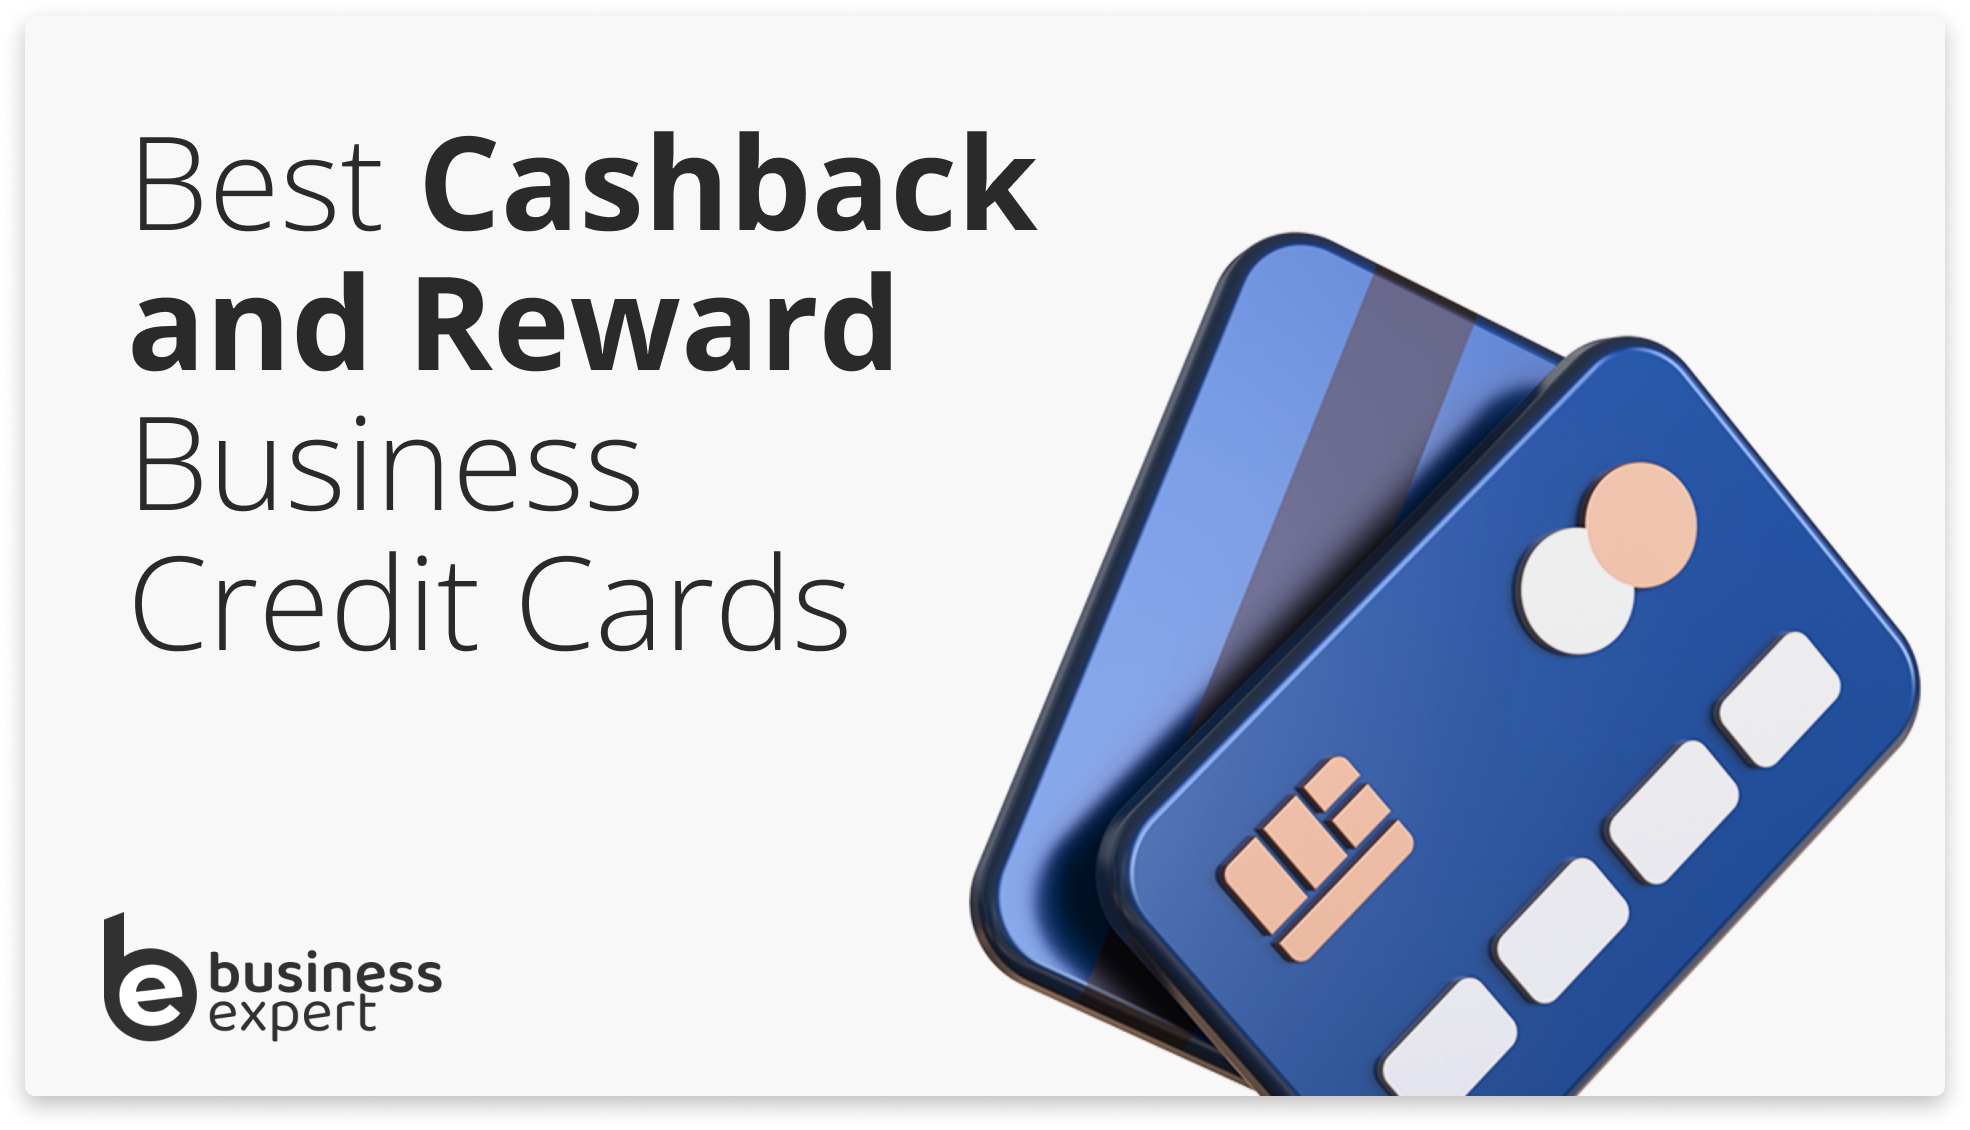 Cash back credit card offers